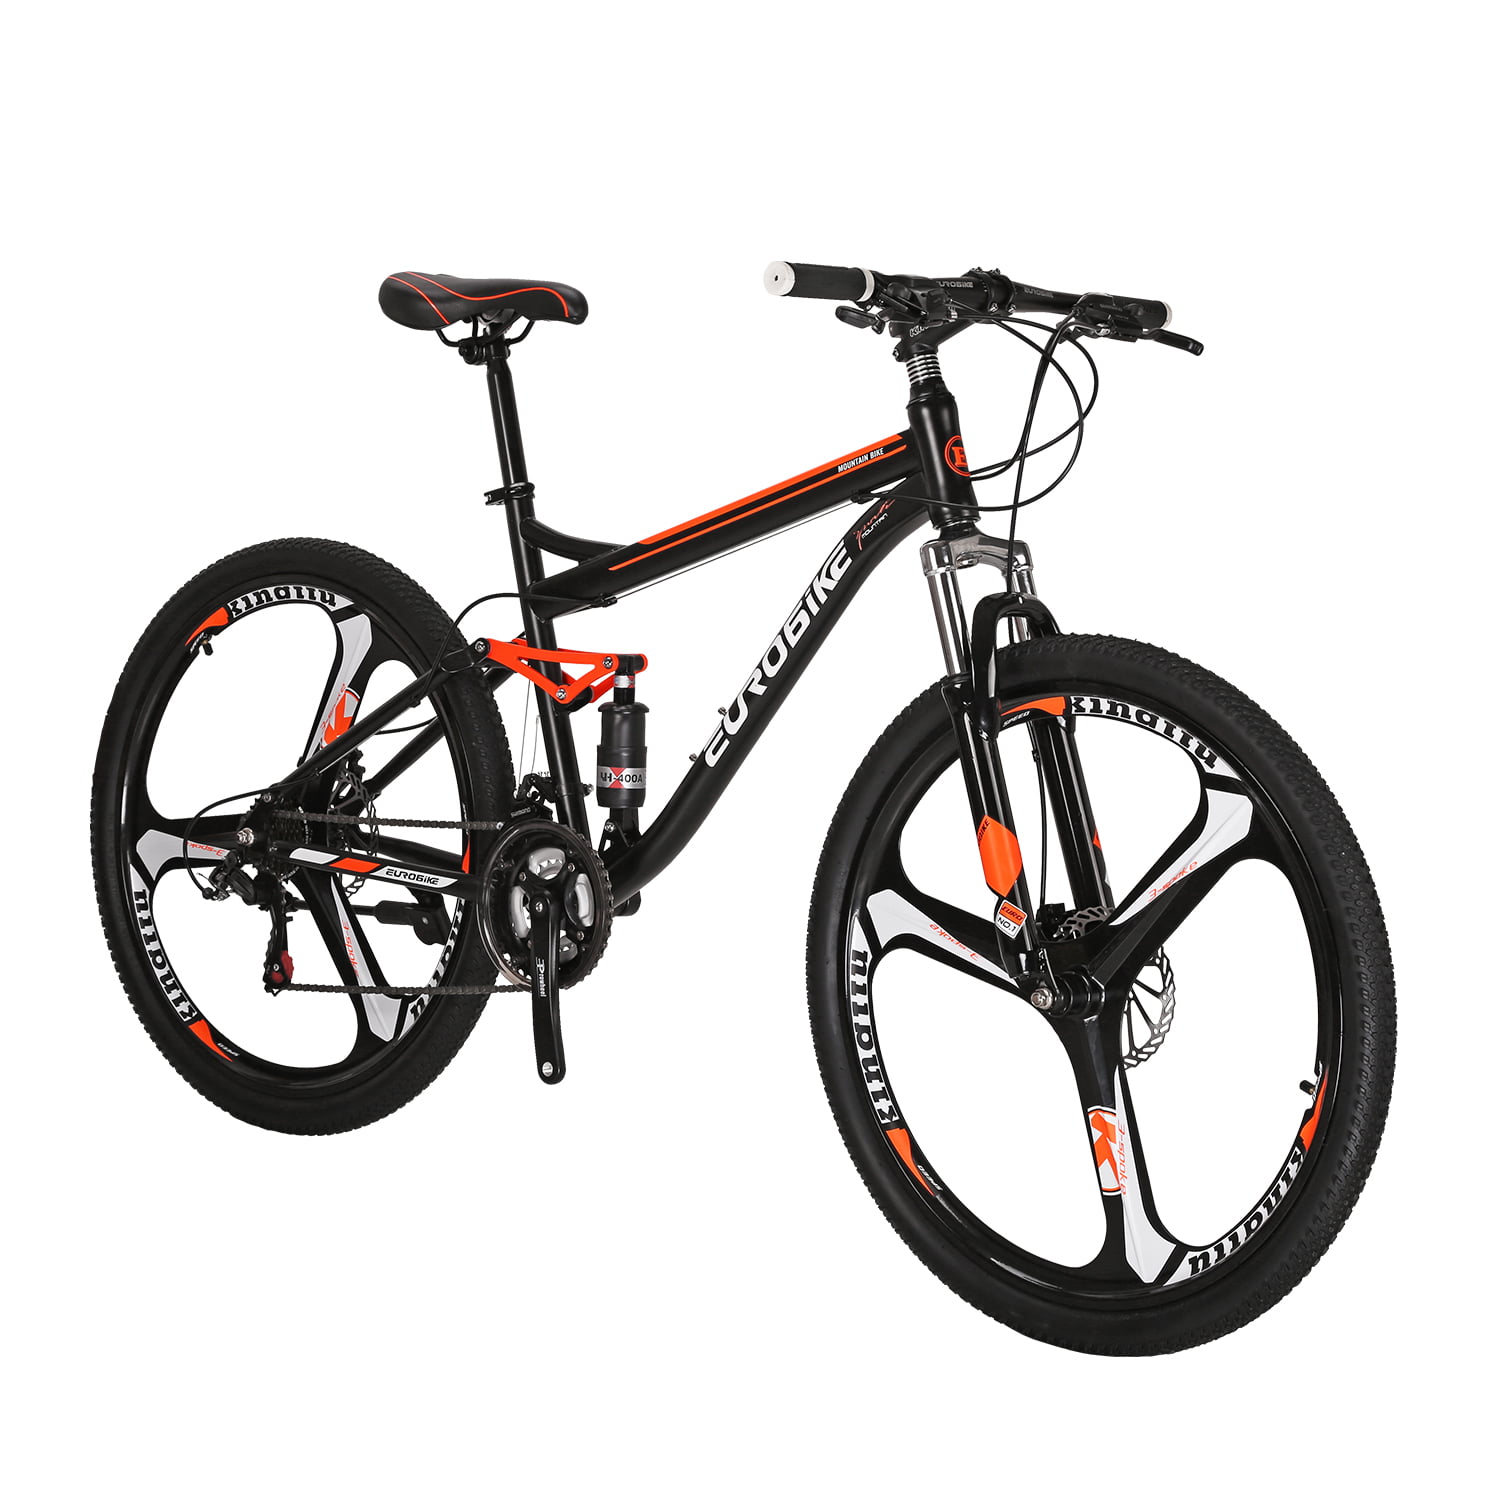 Eurobike S7 Mountain Bike 21 Speed Dual Suspension Mountain Bike 27.5 Inches Wheels Bicycle Black Orange